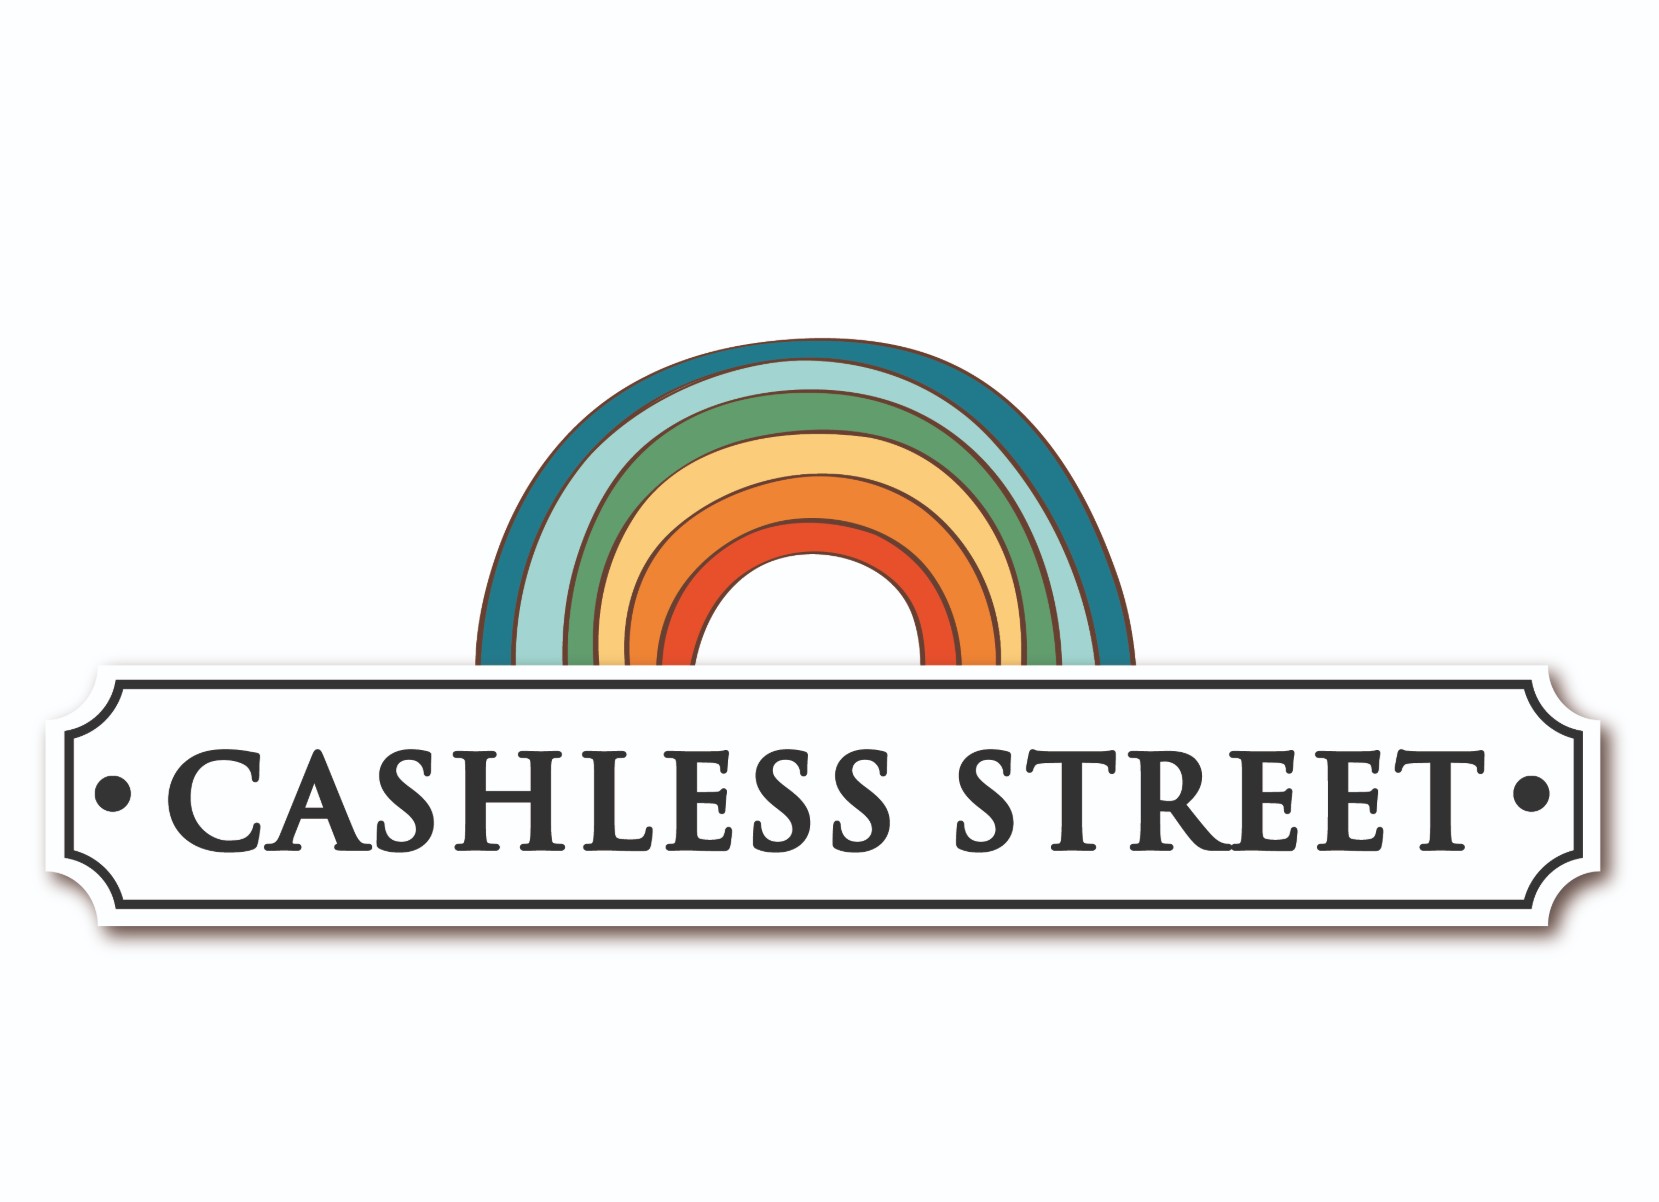 Cashless street sign